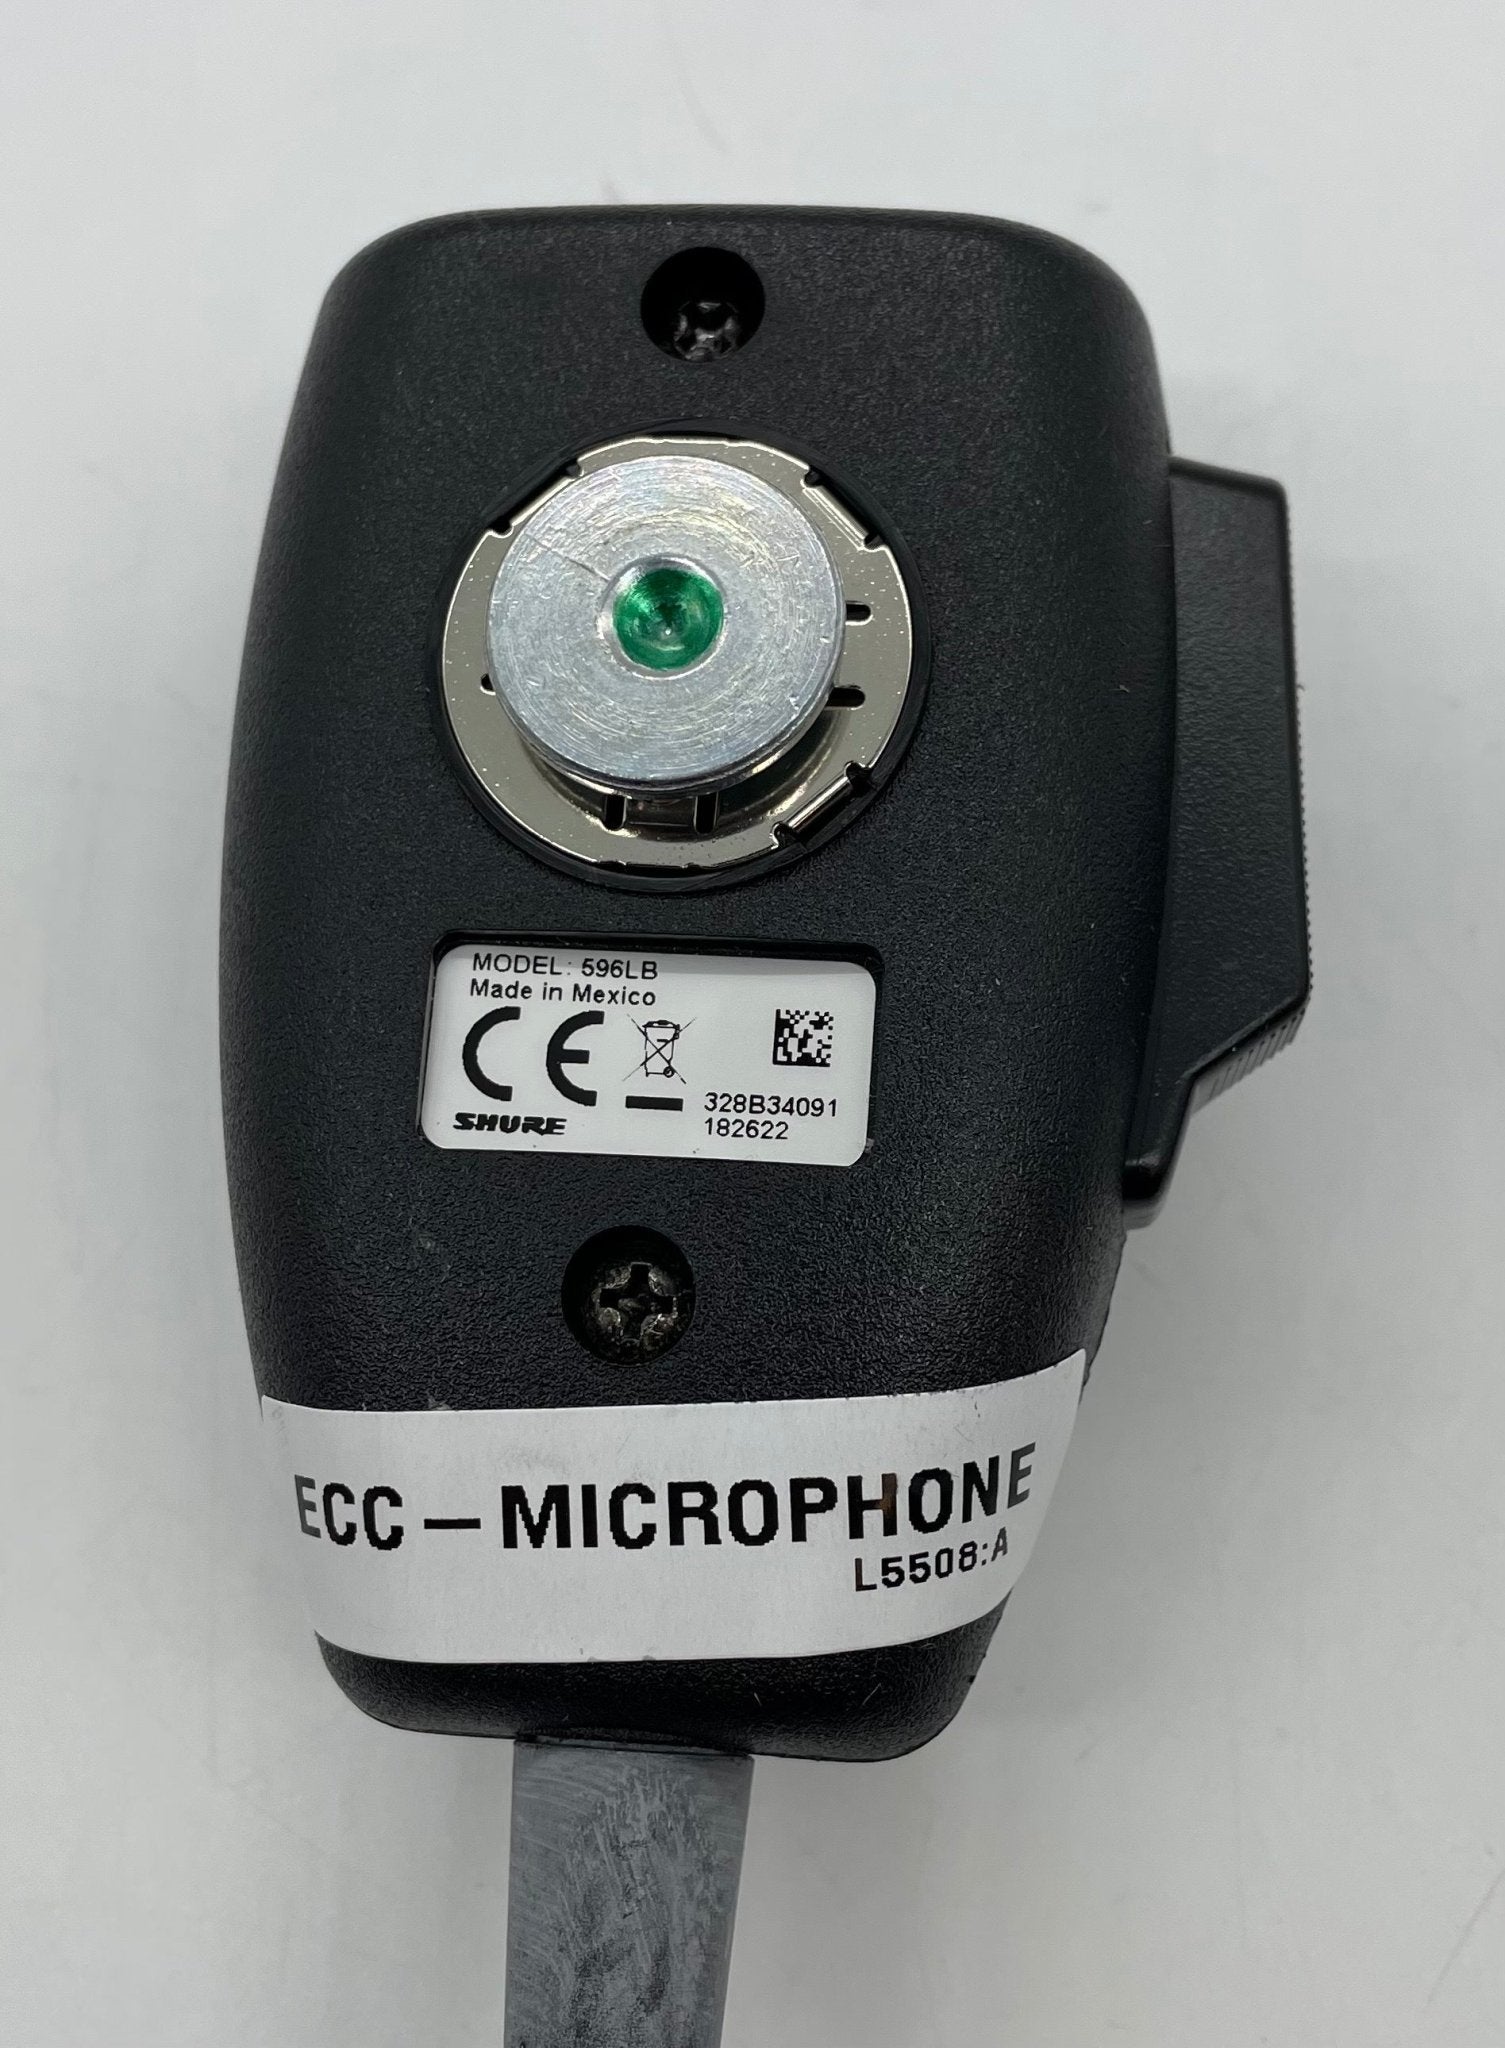 Firelite ECC-MICROPHONE - The Fire Alarm Supplier